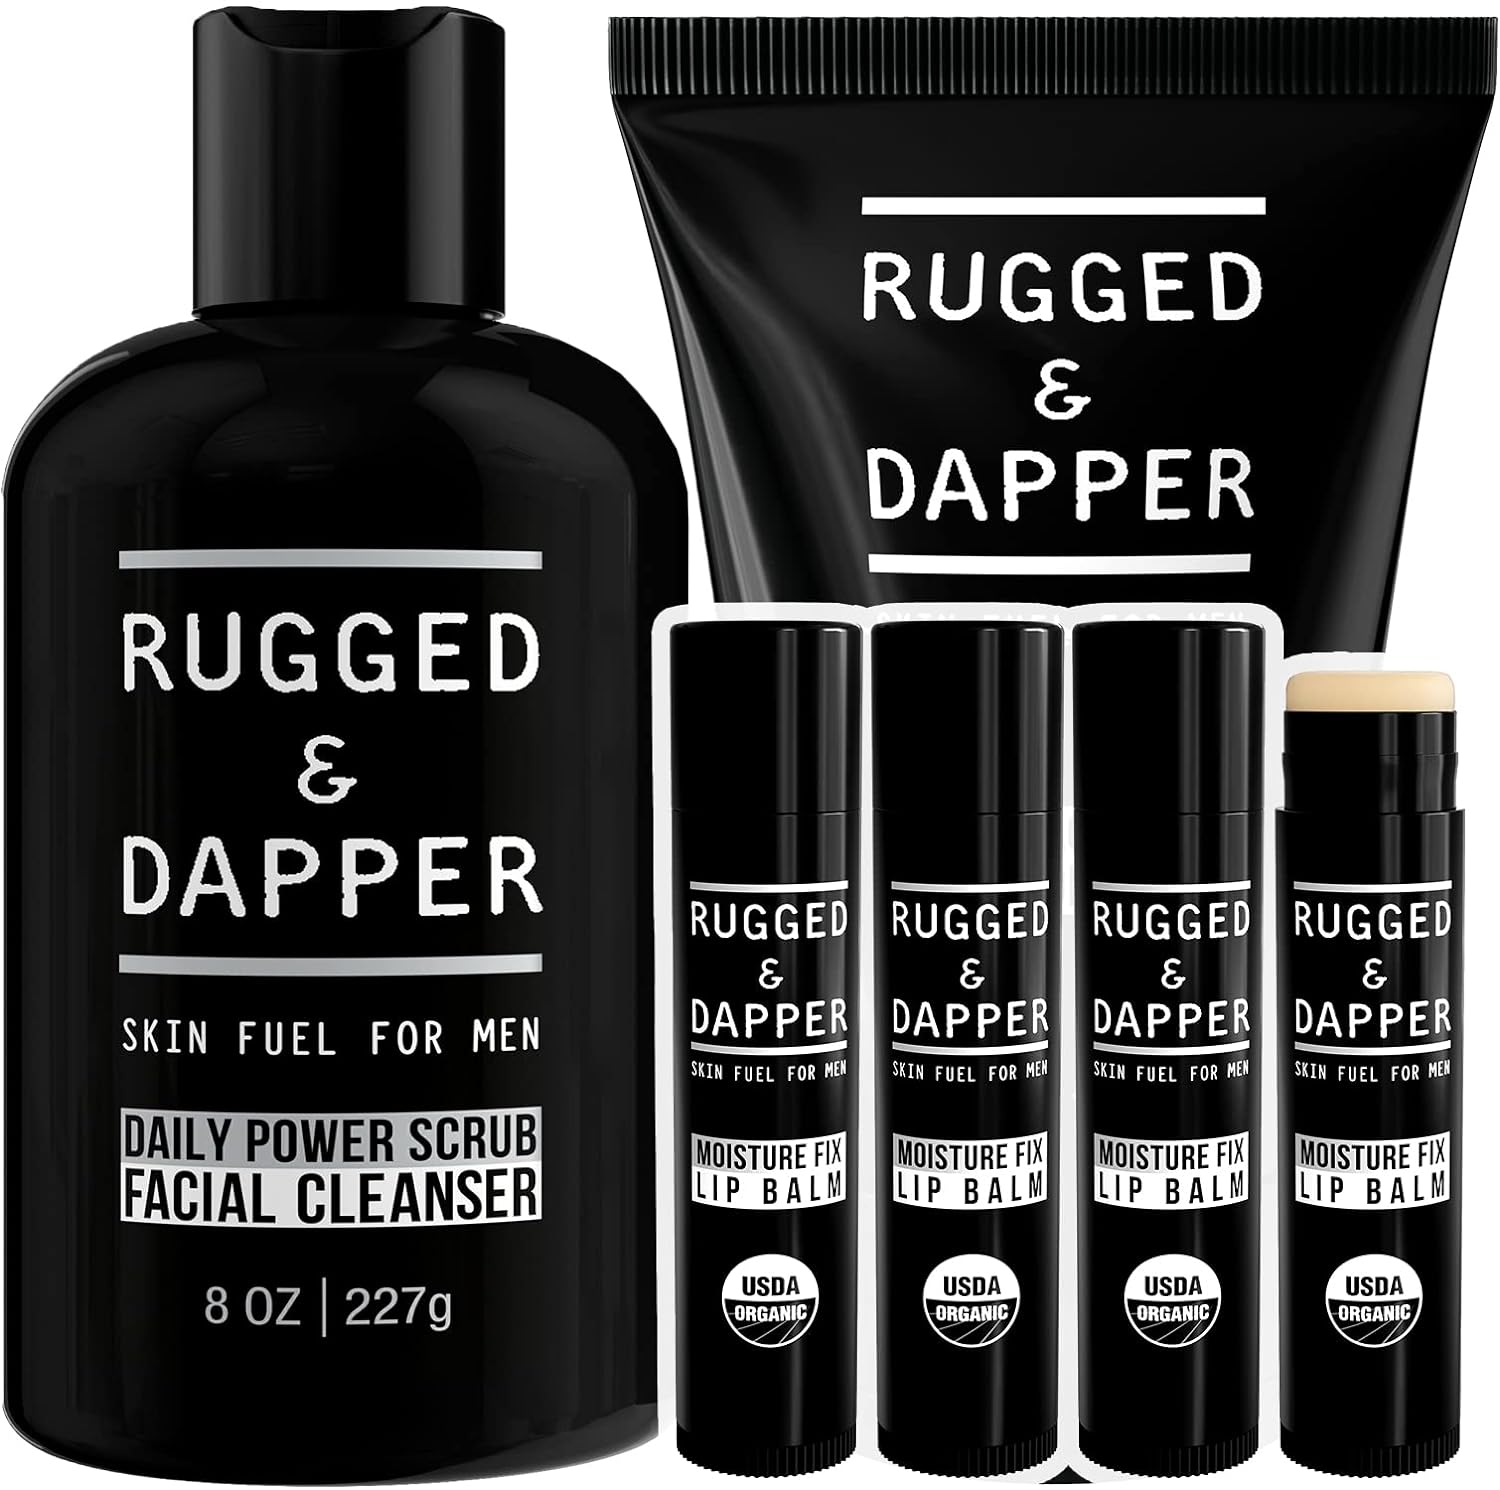 RUGGED & DAPPER - Hydration Remedy Lip Balm, Age Defense Face Moisturizer and Daily Power Scrub Facial Cleanser